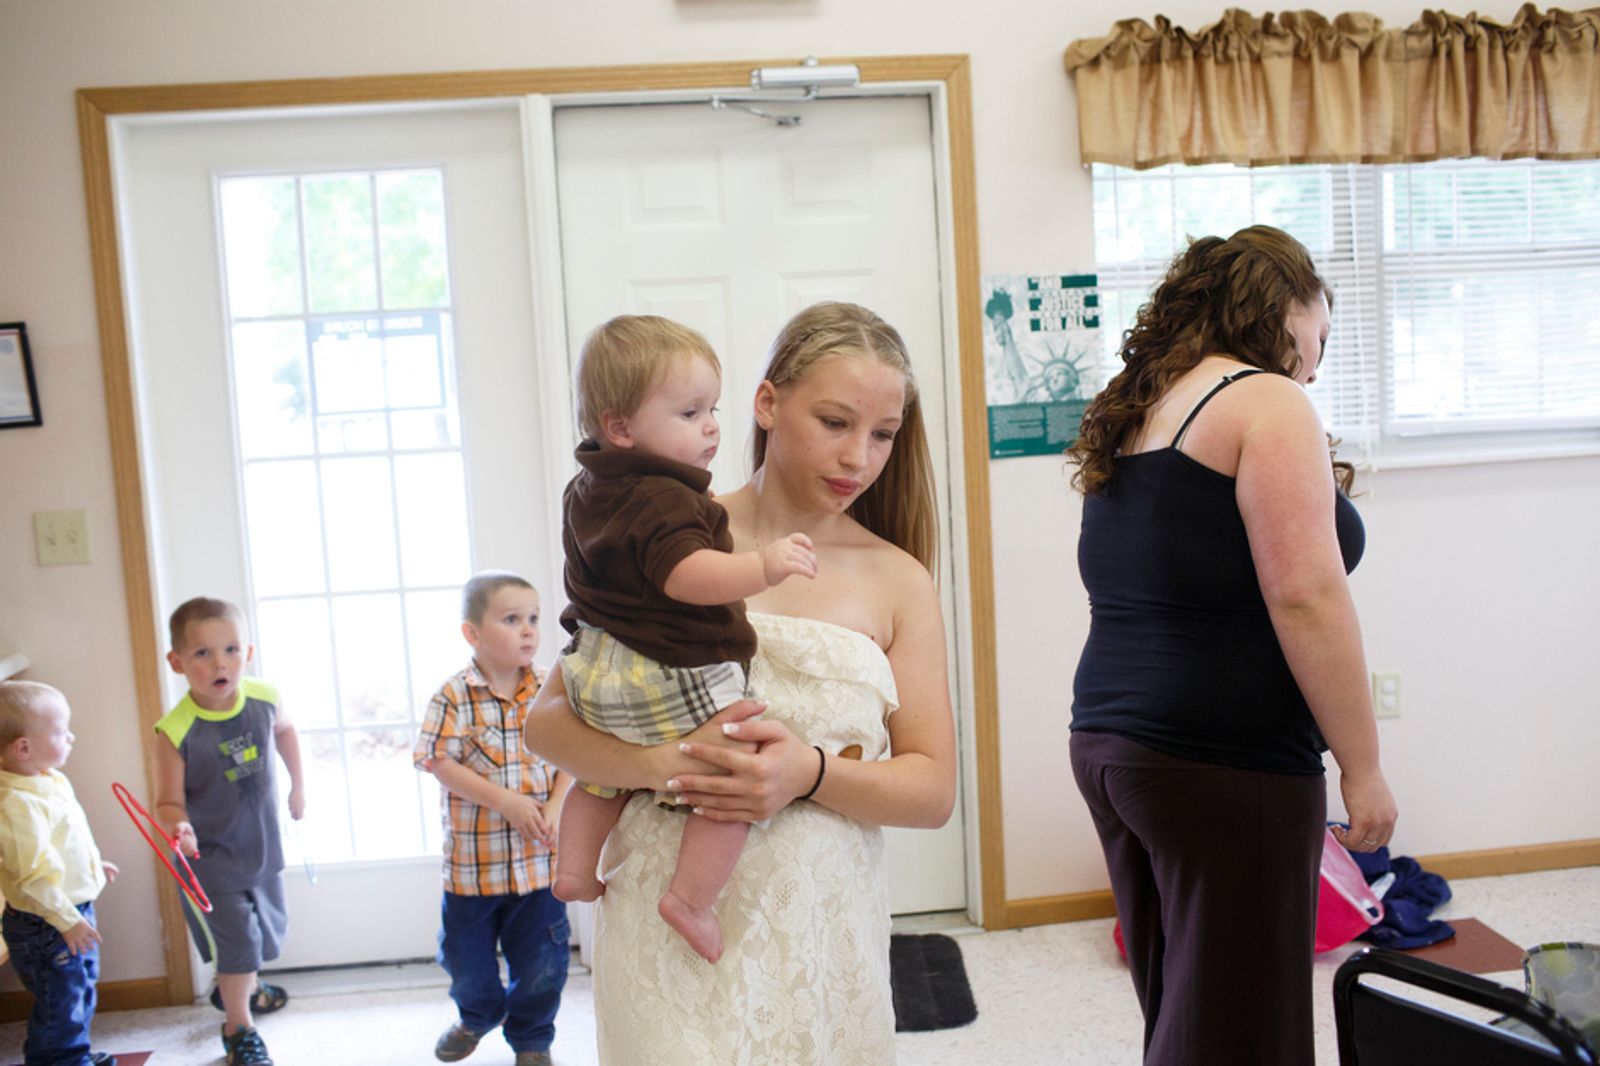 © Maddie Mcgarvey - Sonya carries around her cousin before her aunt's wedding.